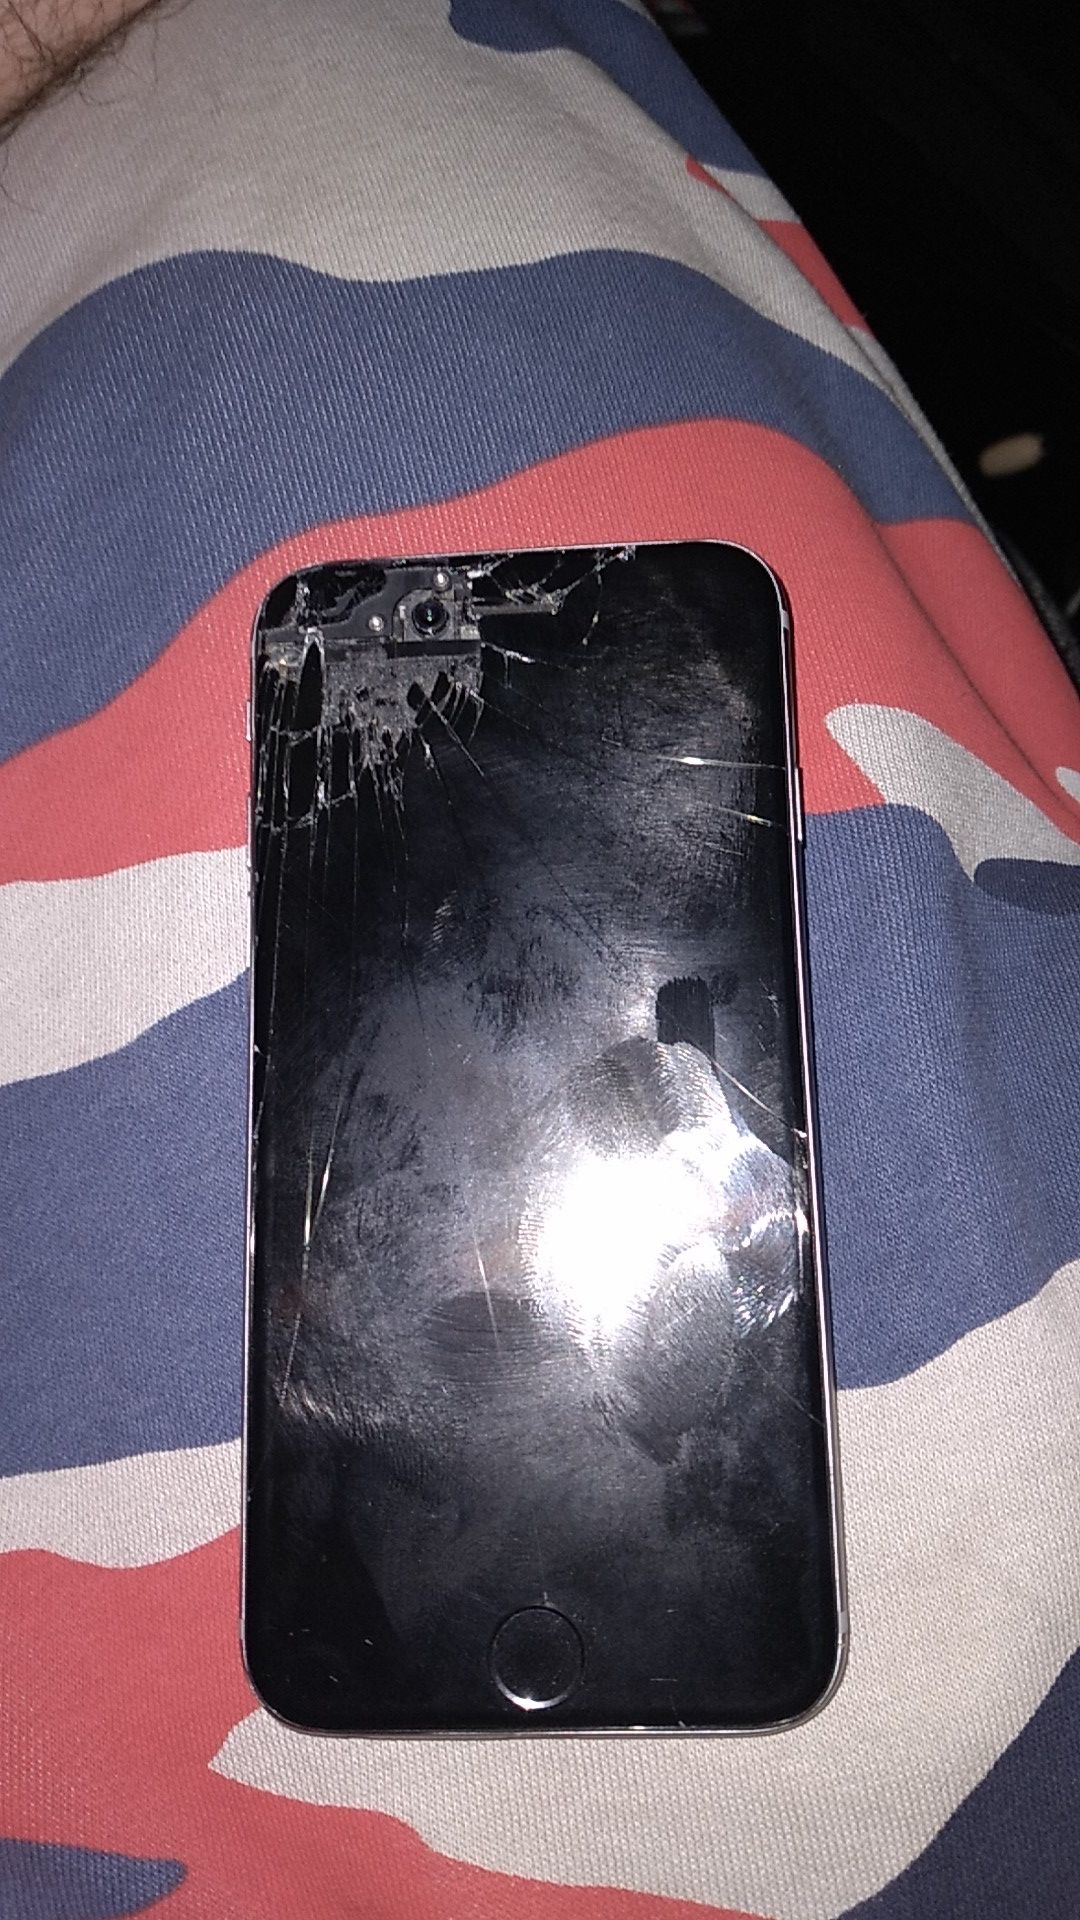 Iphone 6 cracked works great still unlocked